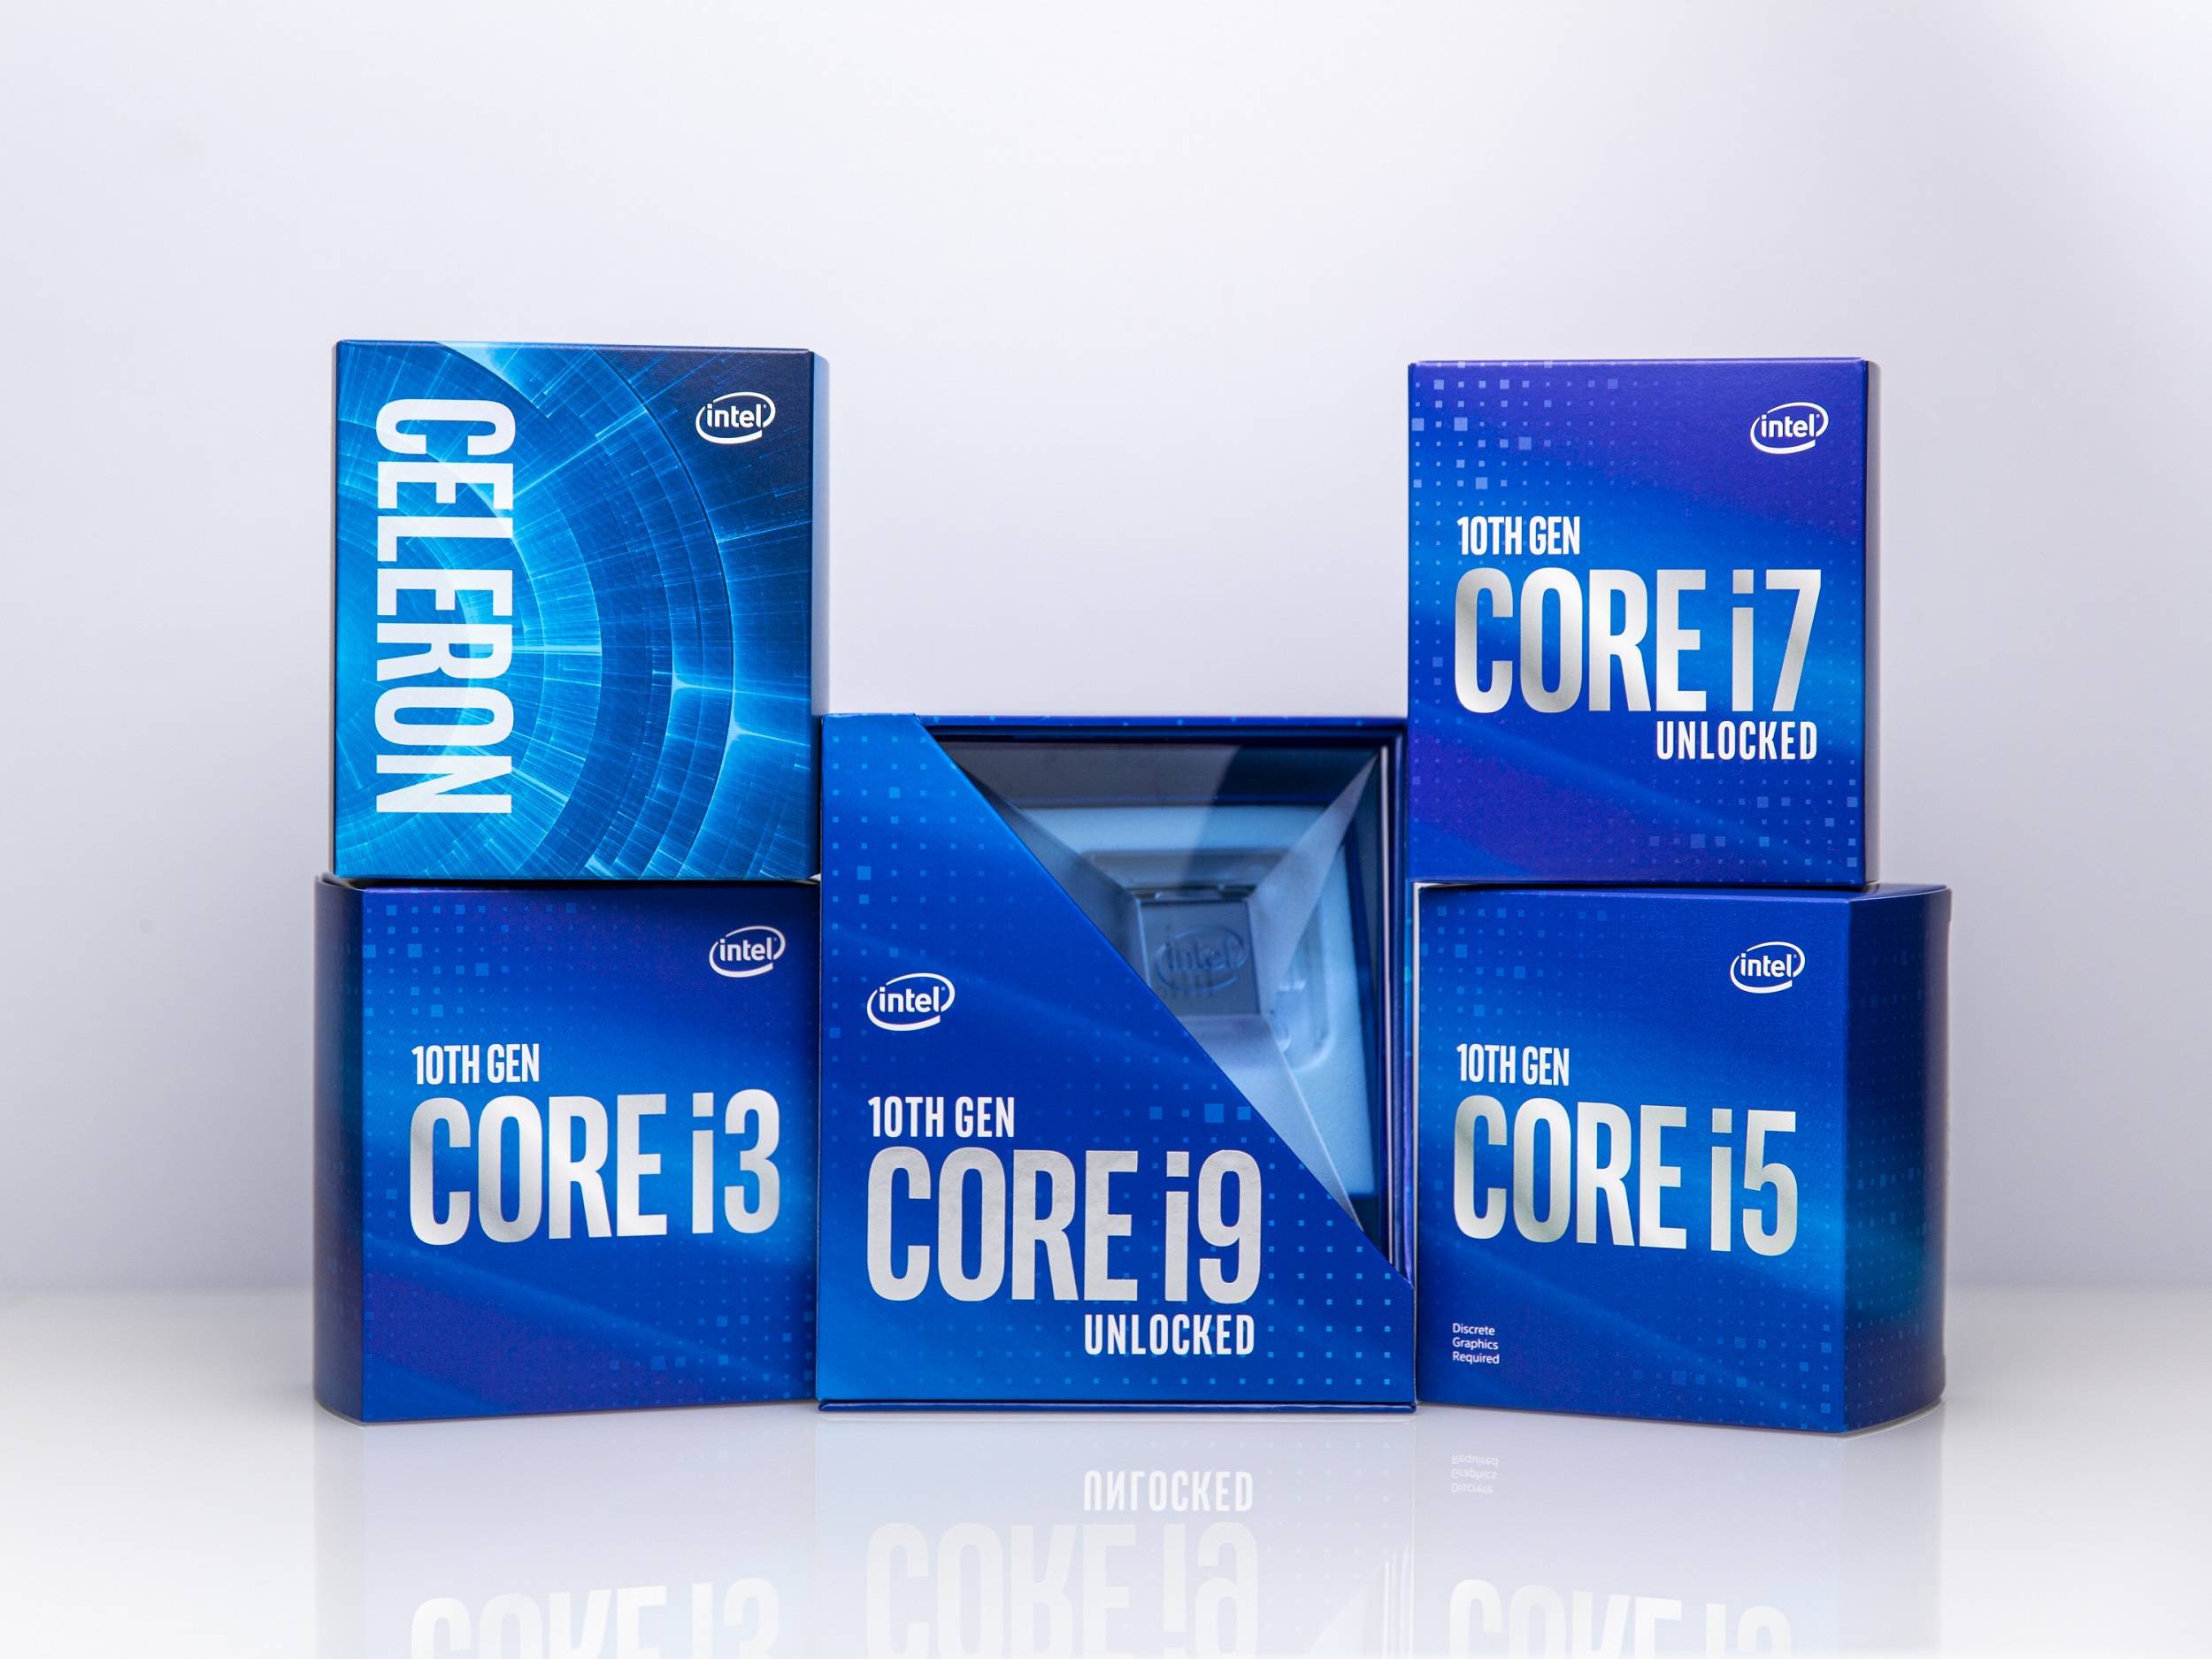 Intel เปิดตัว CPU สำหรับเล่นเกมที่เร็วที่สุดในโลก Intel® Core™ ซีรีส์ S Gen10